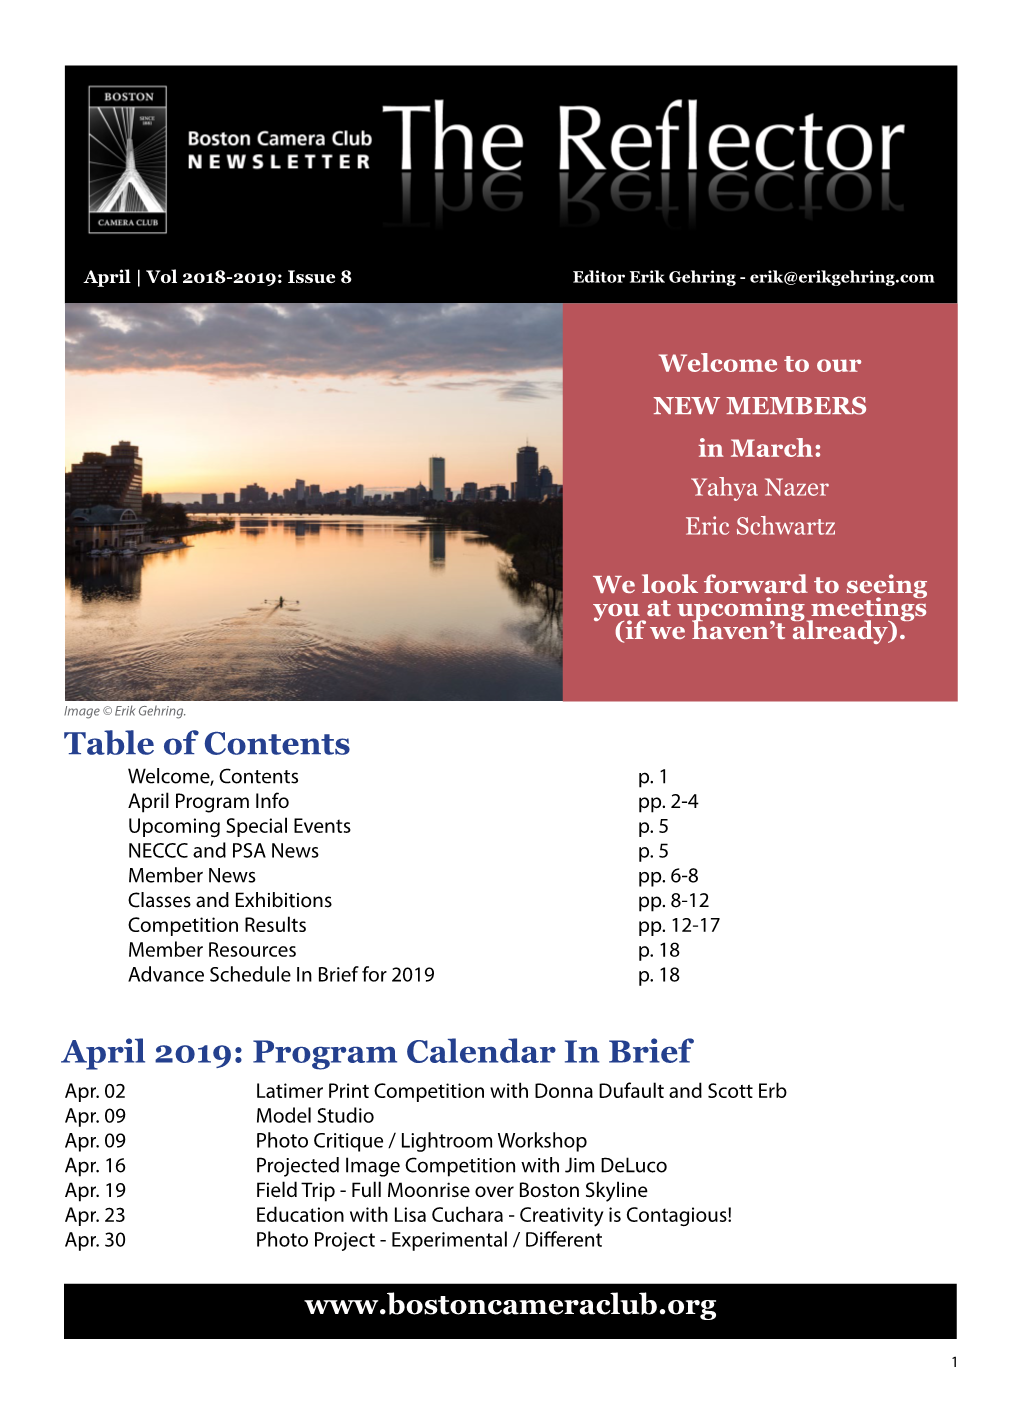 Table of Contents April 2019: Program Calendar in Brief